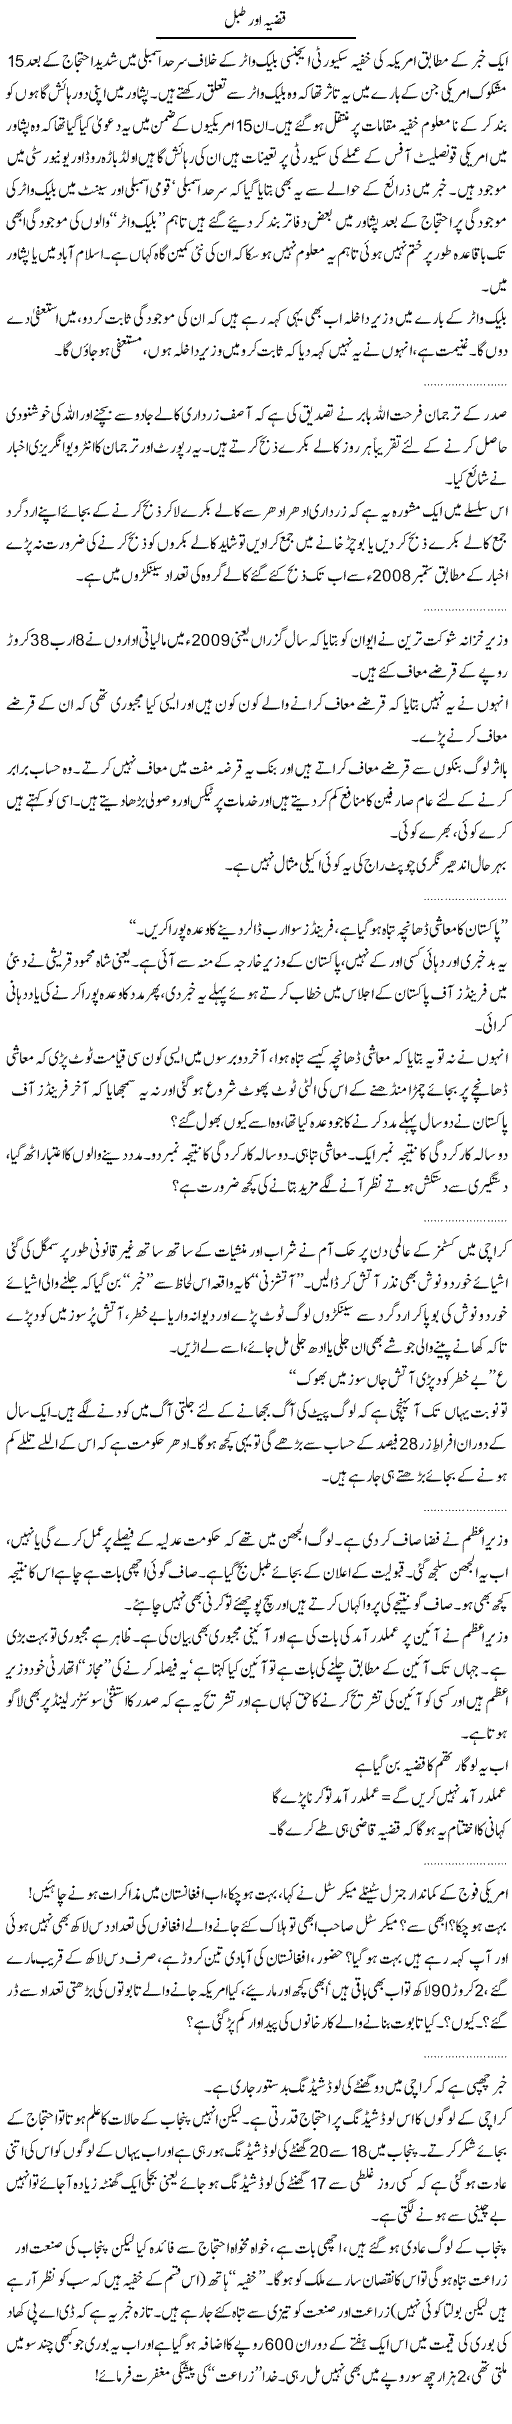 Qazia aur Tabal Express Column Abdullah Tariq 29 jan 2010